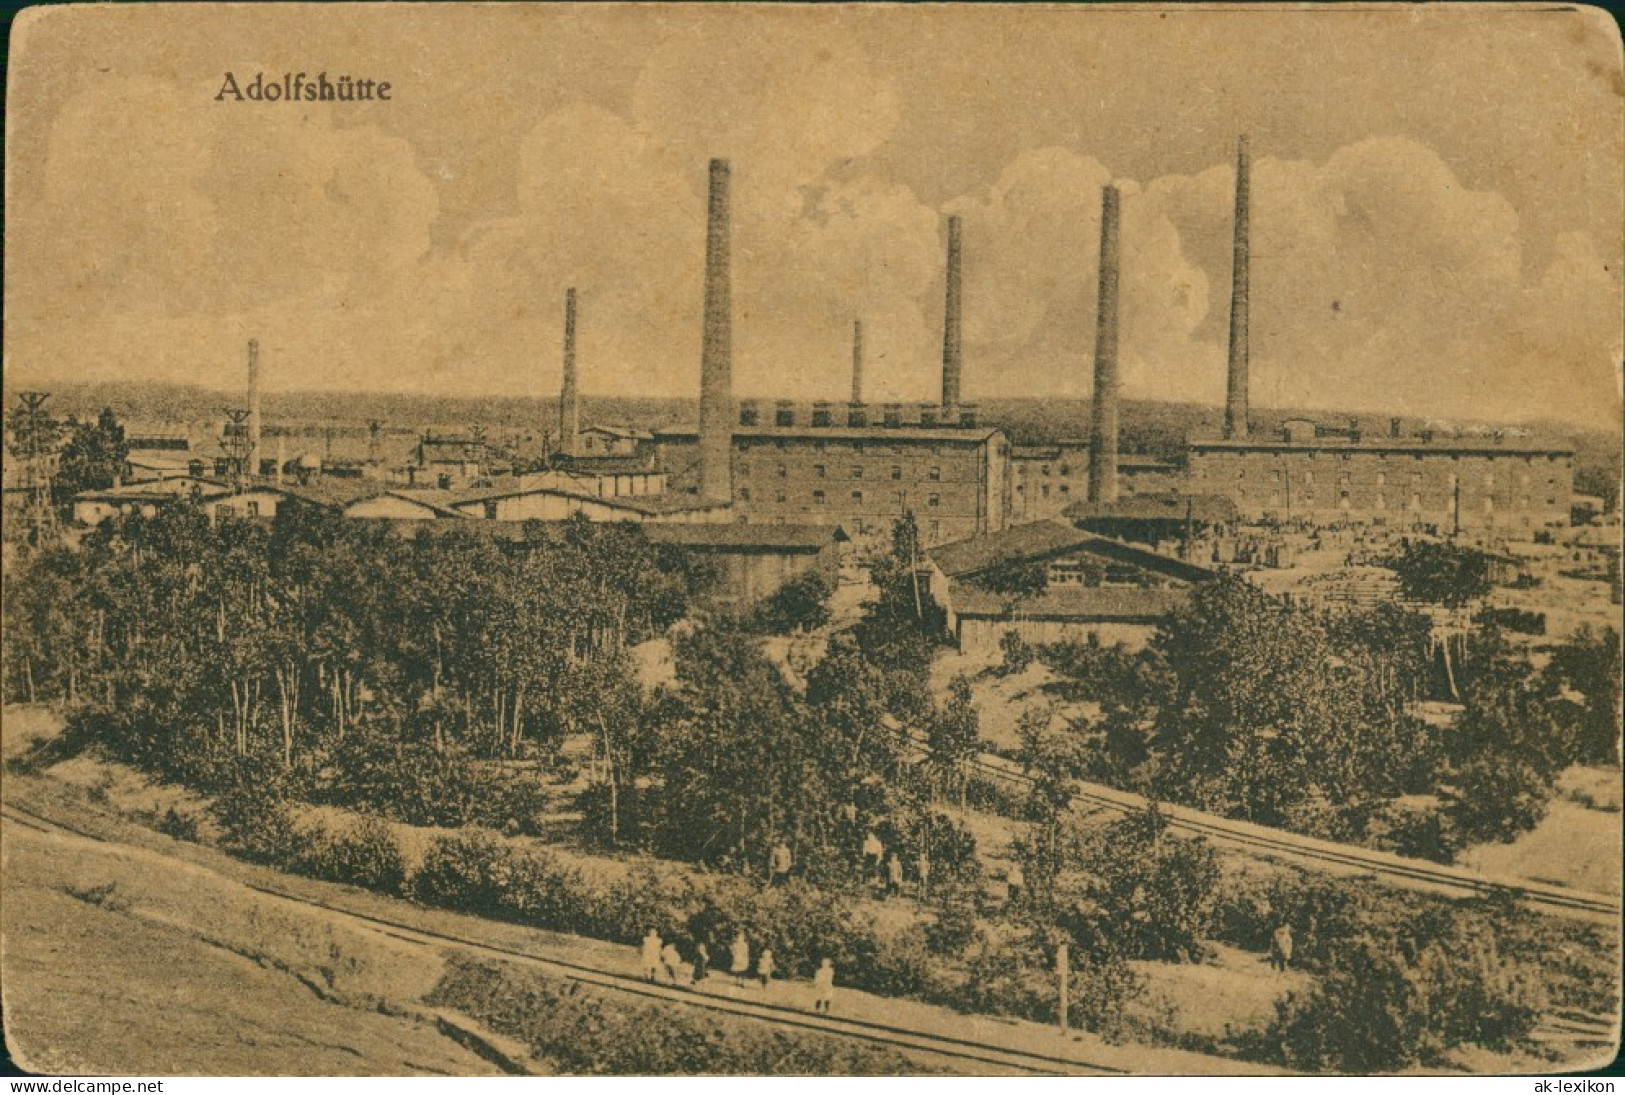 Adolfshütte-Großdubrau Wulka Dubrawa Fabrikanlage - Adolfshütte 1924 - Grossdubrau Wulka Dubrawa